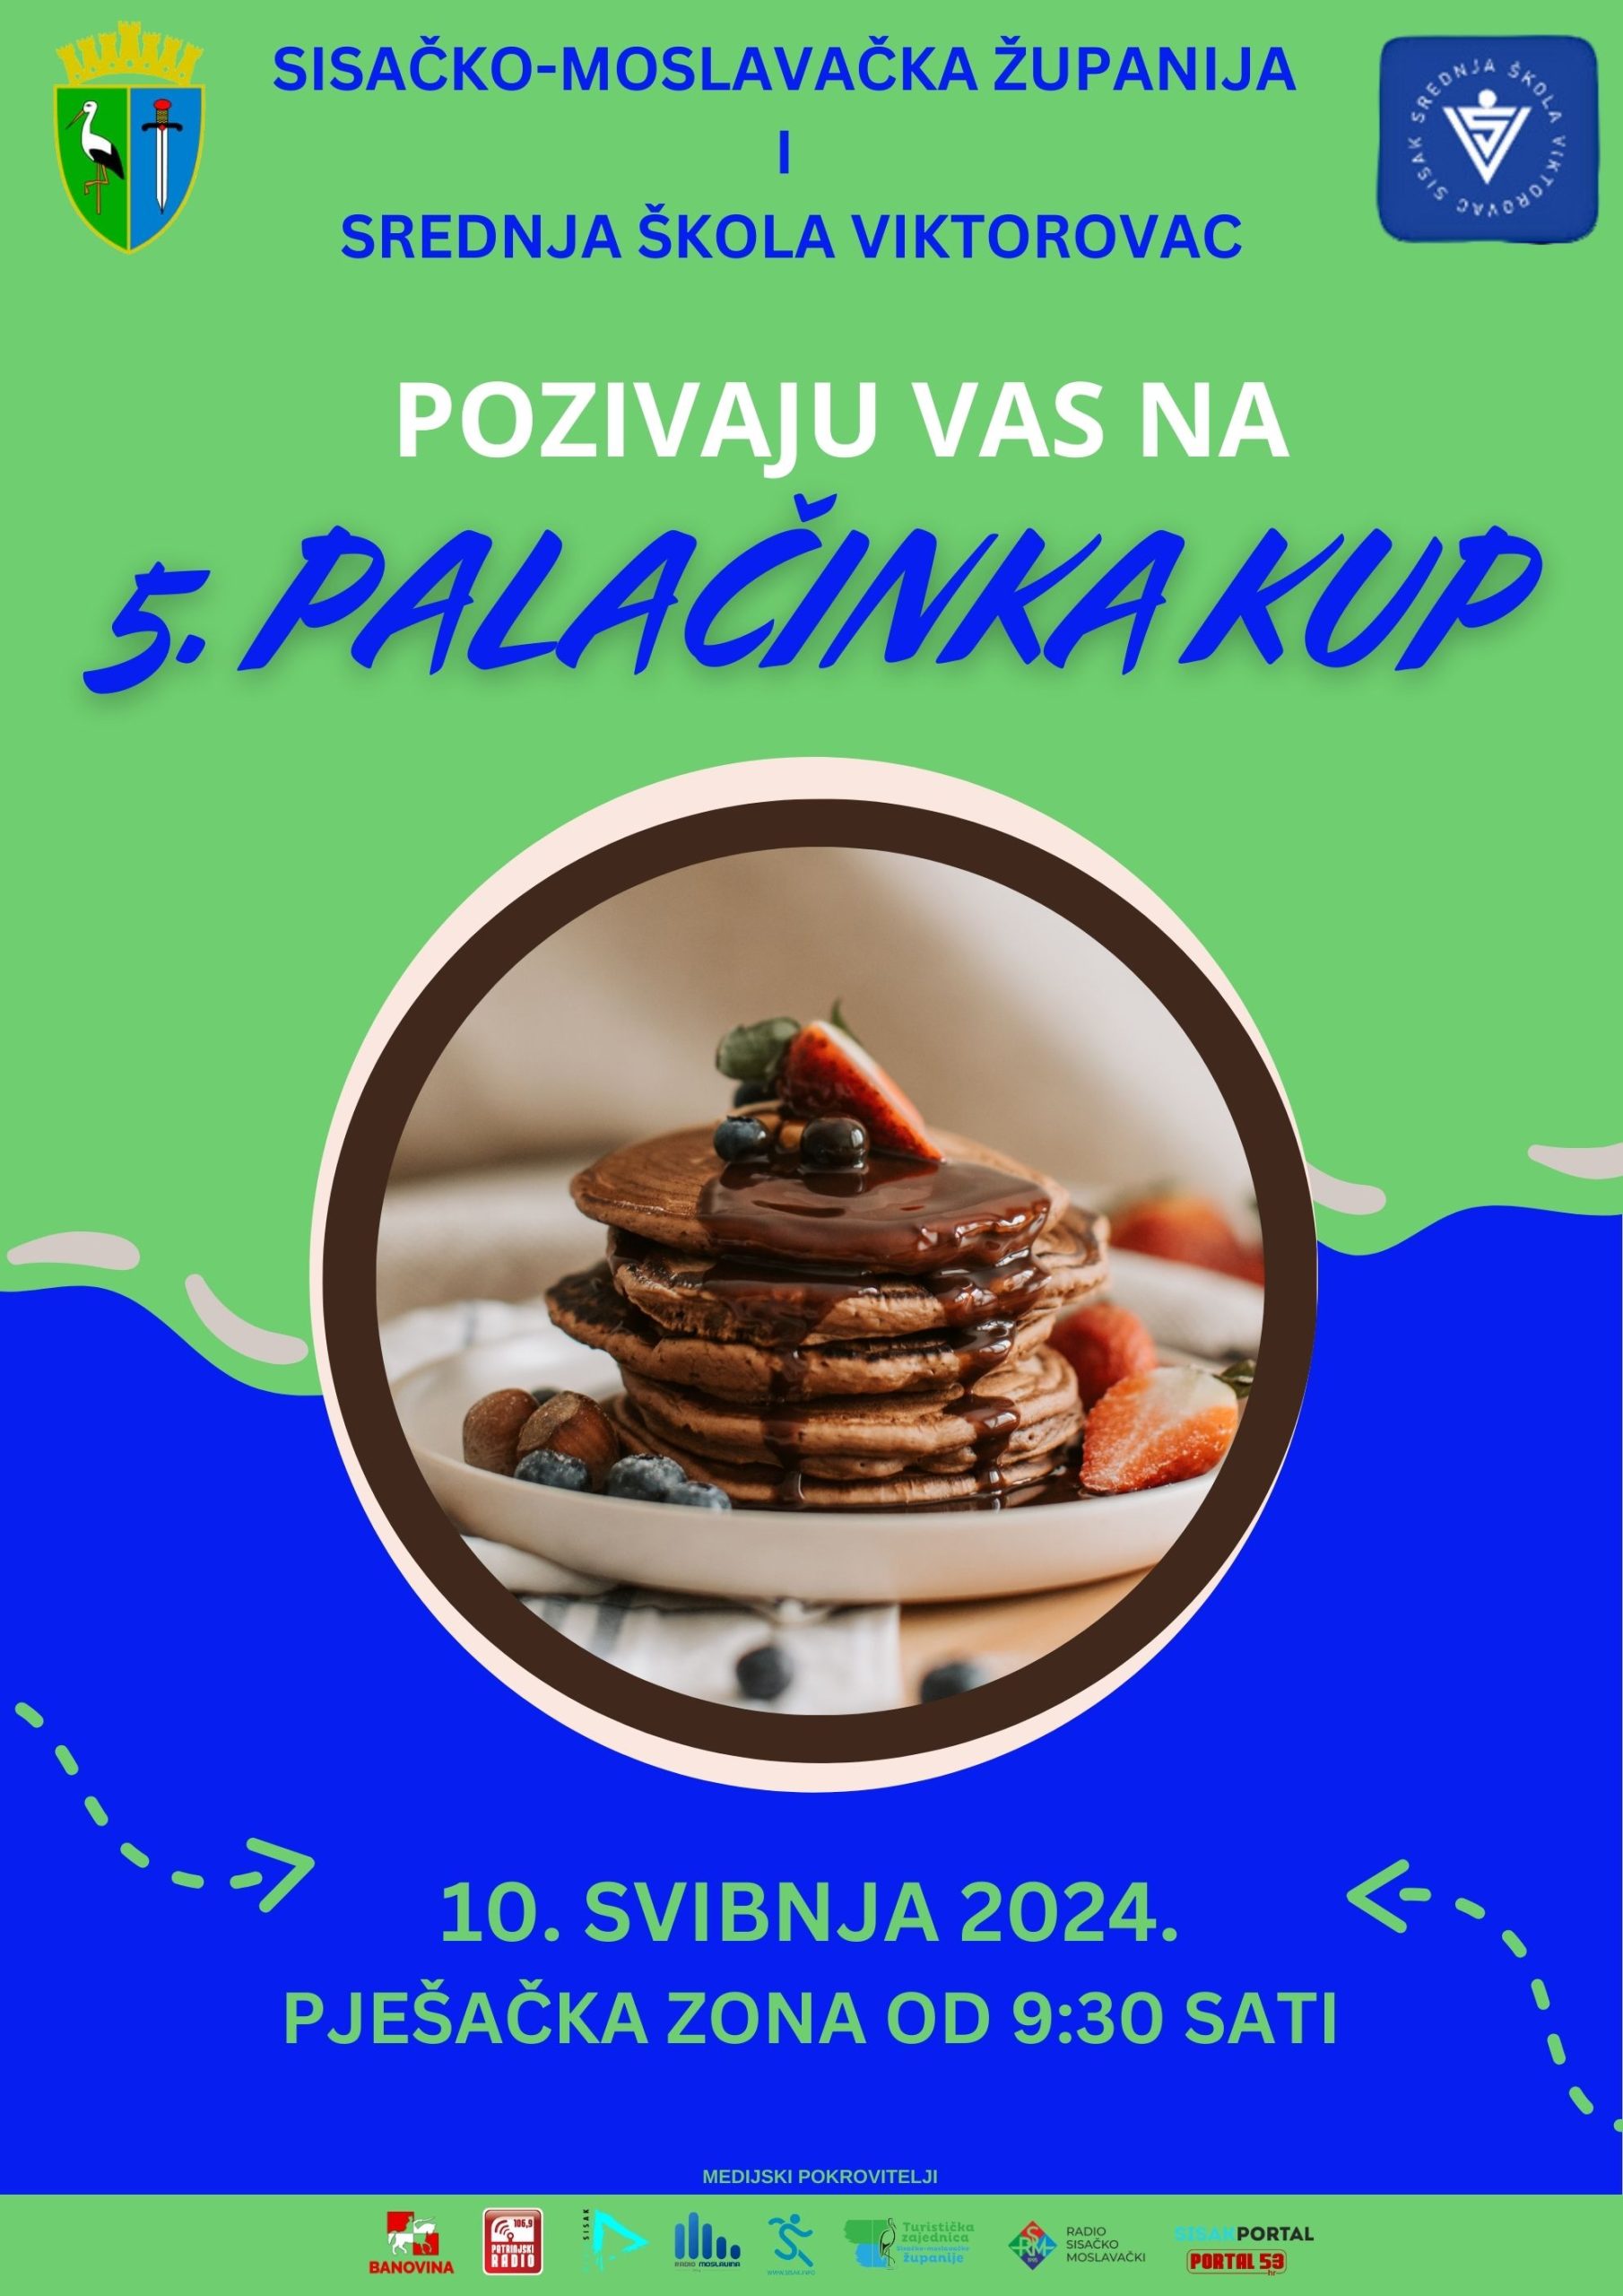 You are currently viewing 5. palačinka kup ovog petka u Sisku